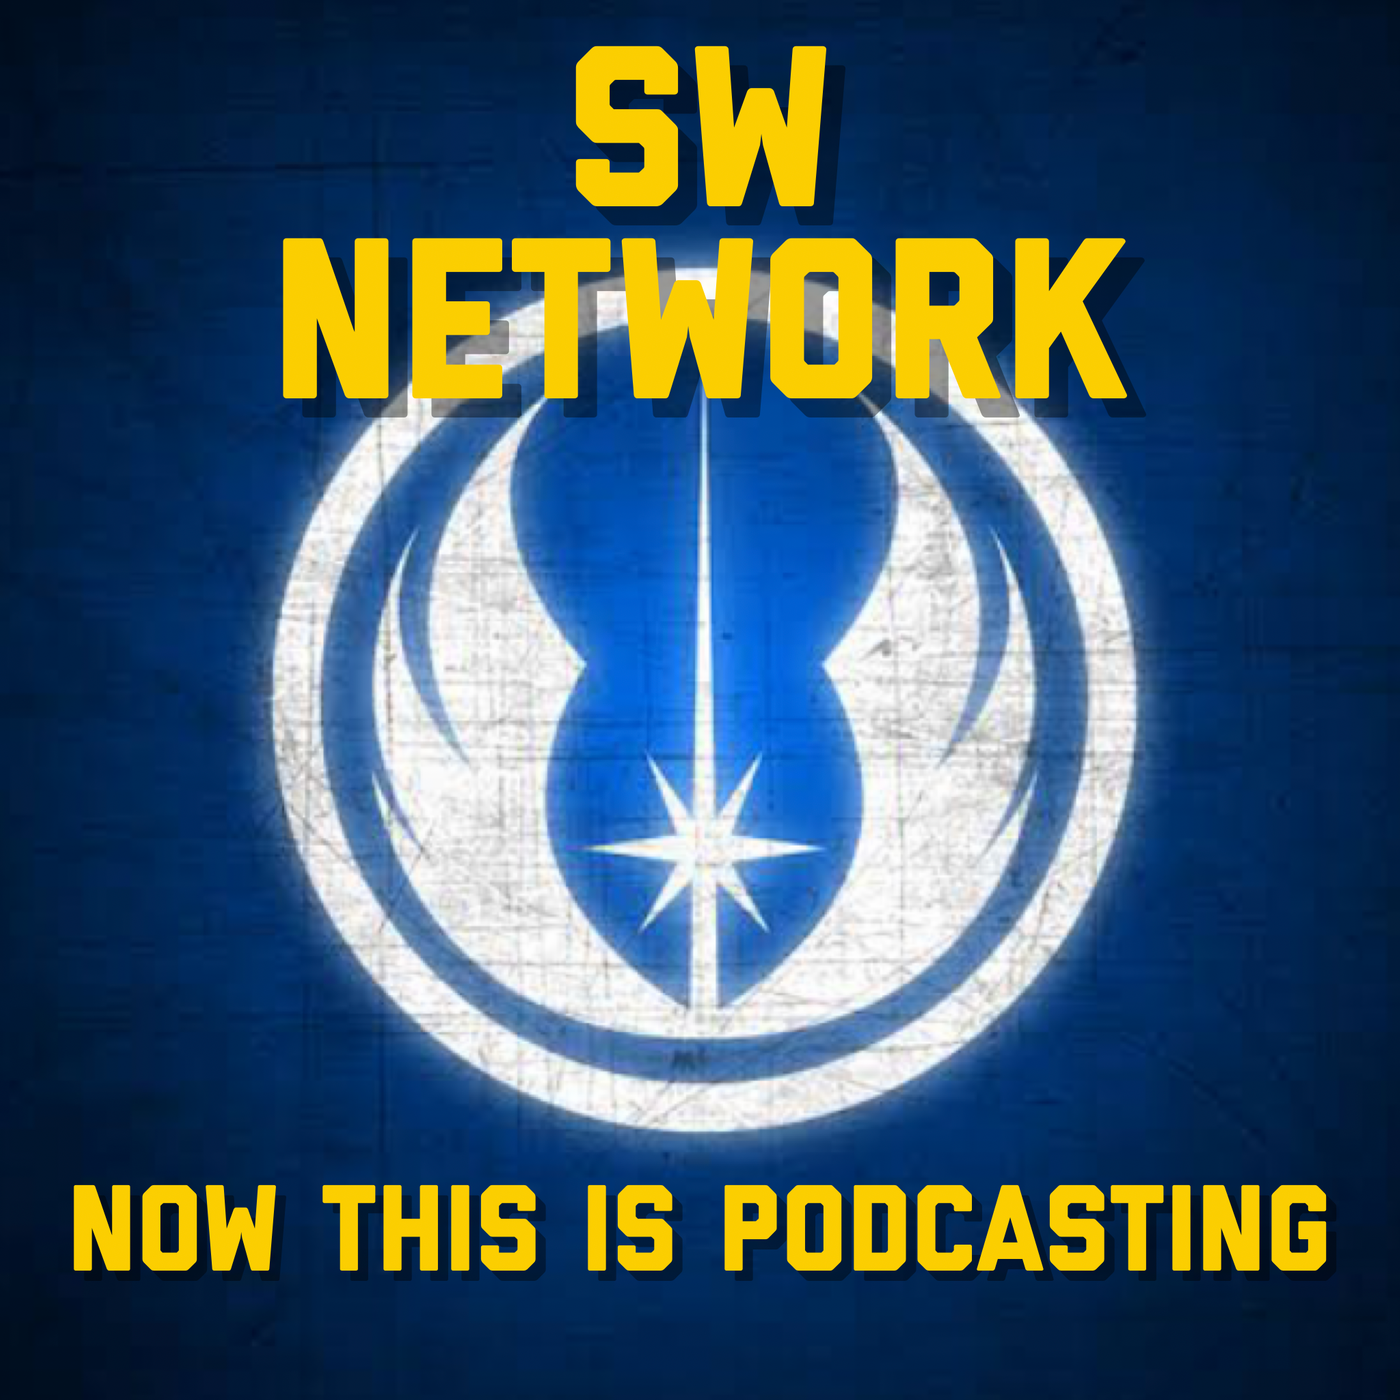 Star Wars Network Podcast